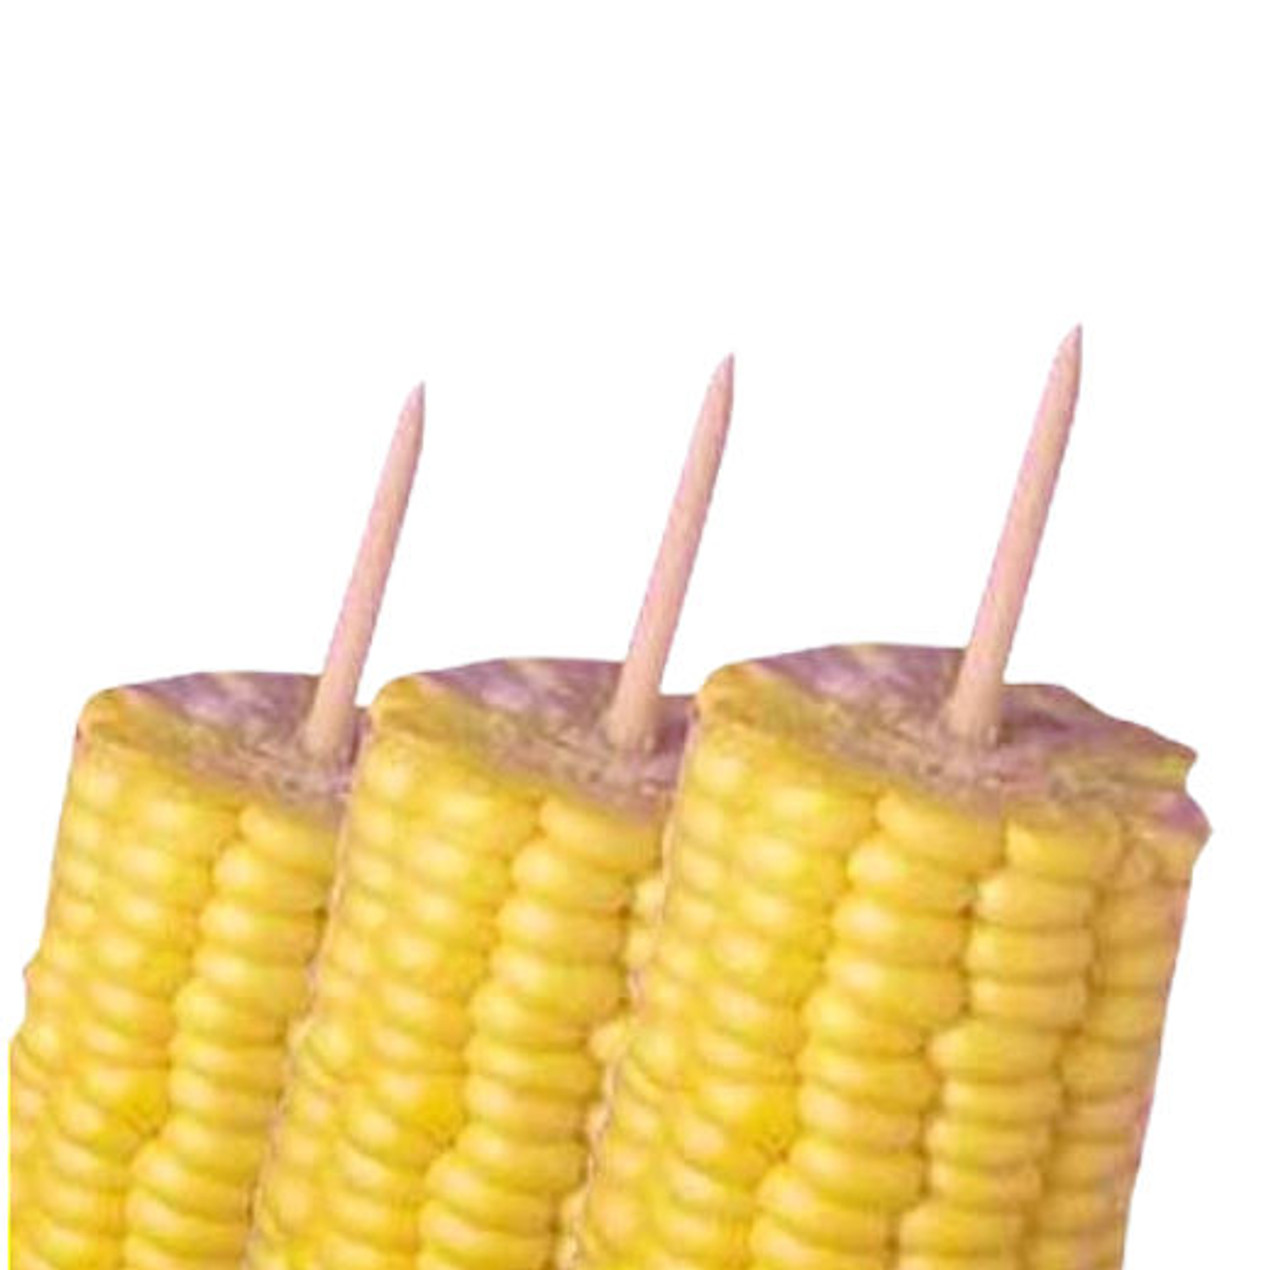 Corn skewers wooden dia 4mm x 48mm 1,000 pieces